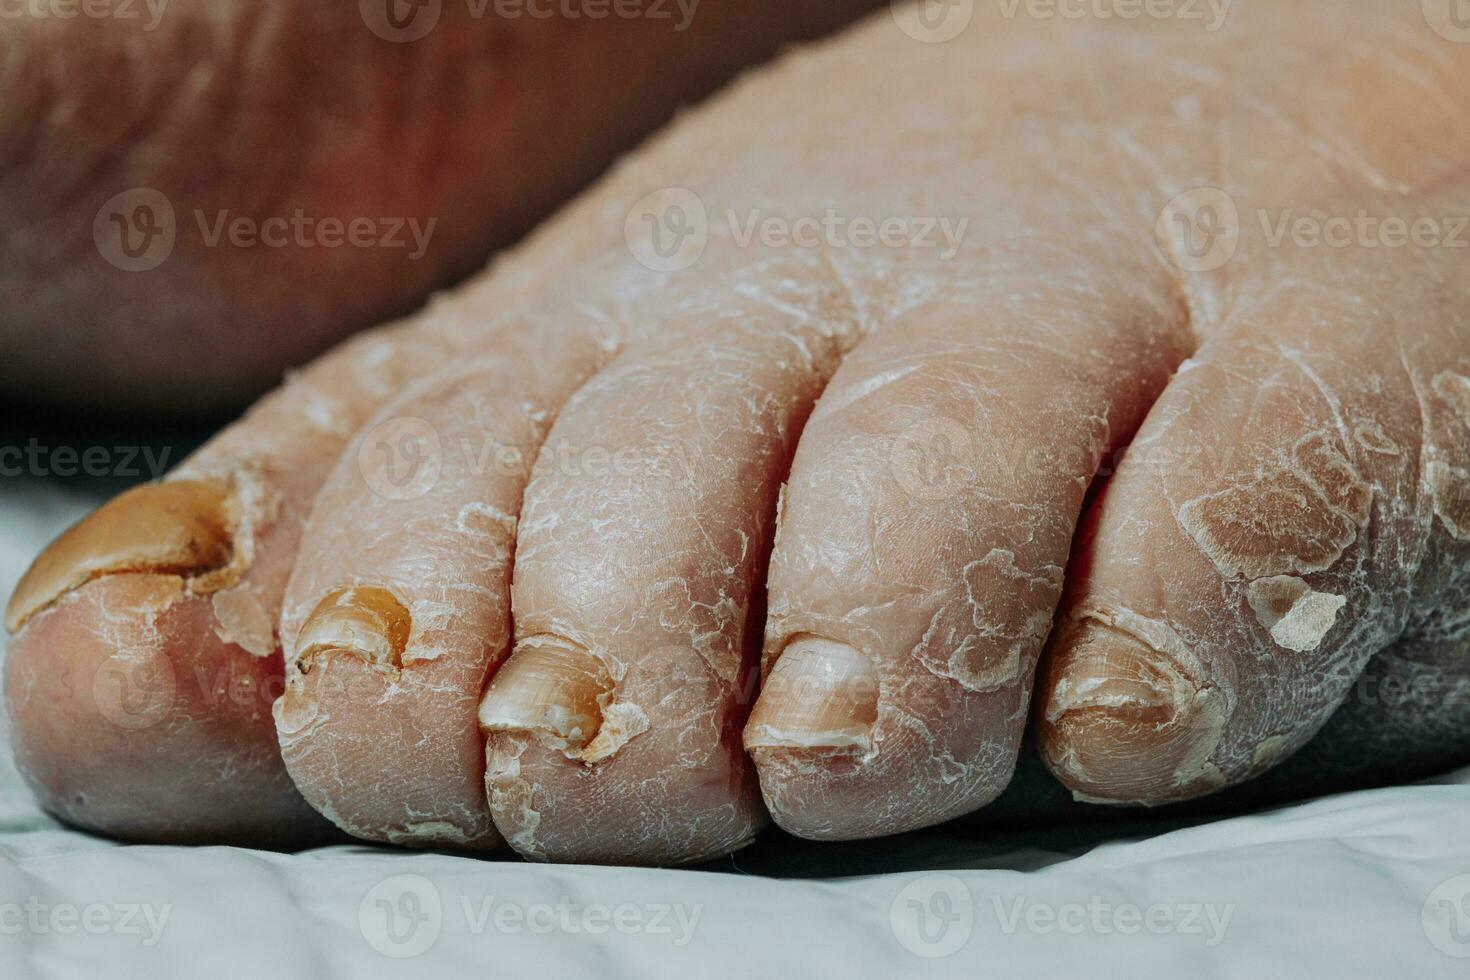 på ett ben, de hud skalar av på grund av till eksem. gulning av de nagel tallrik. konsekvenser av diabetes i de äldre foto